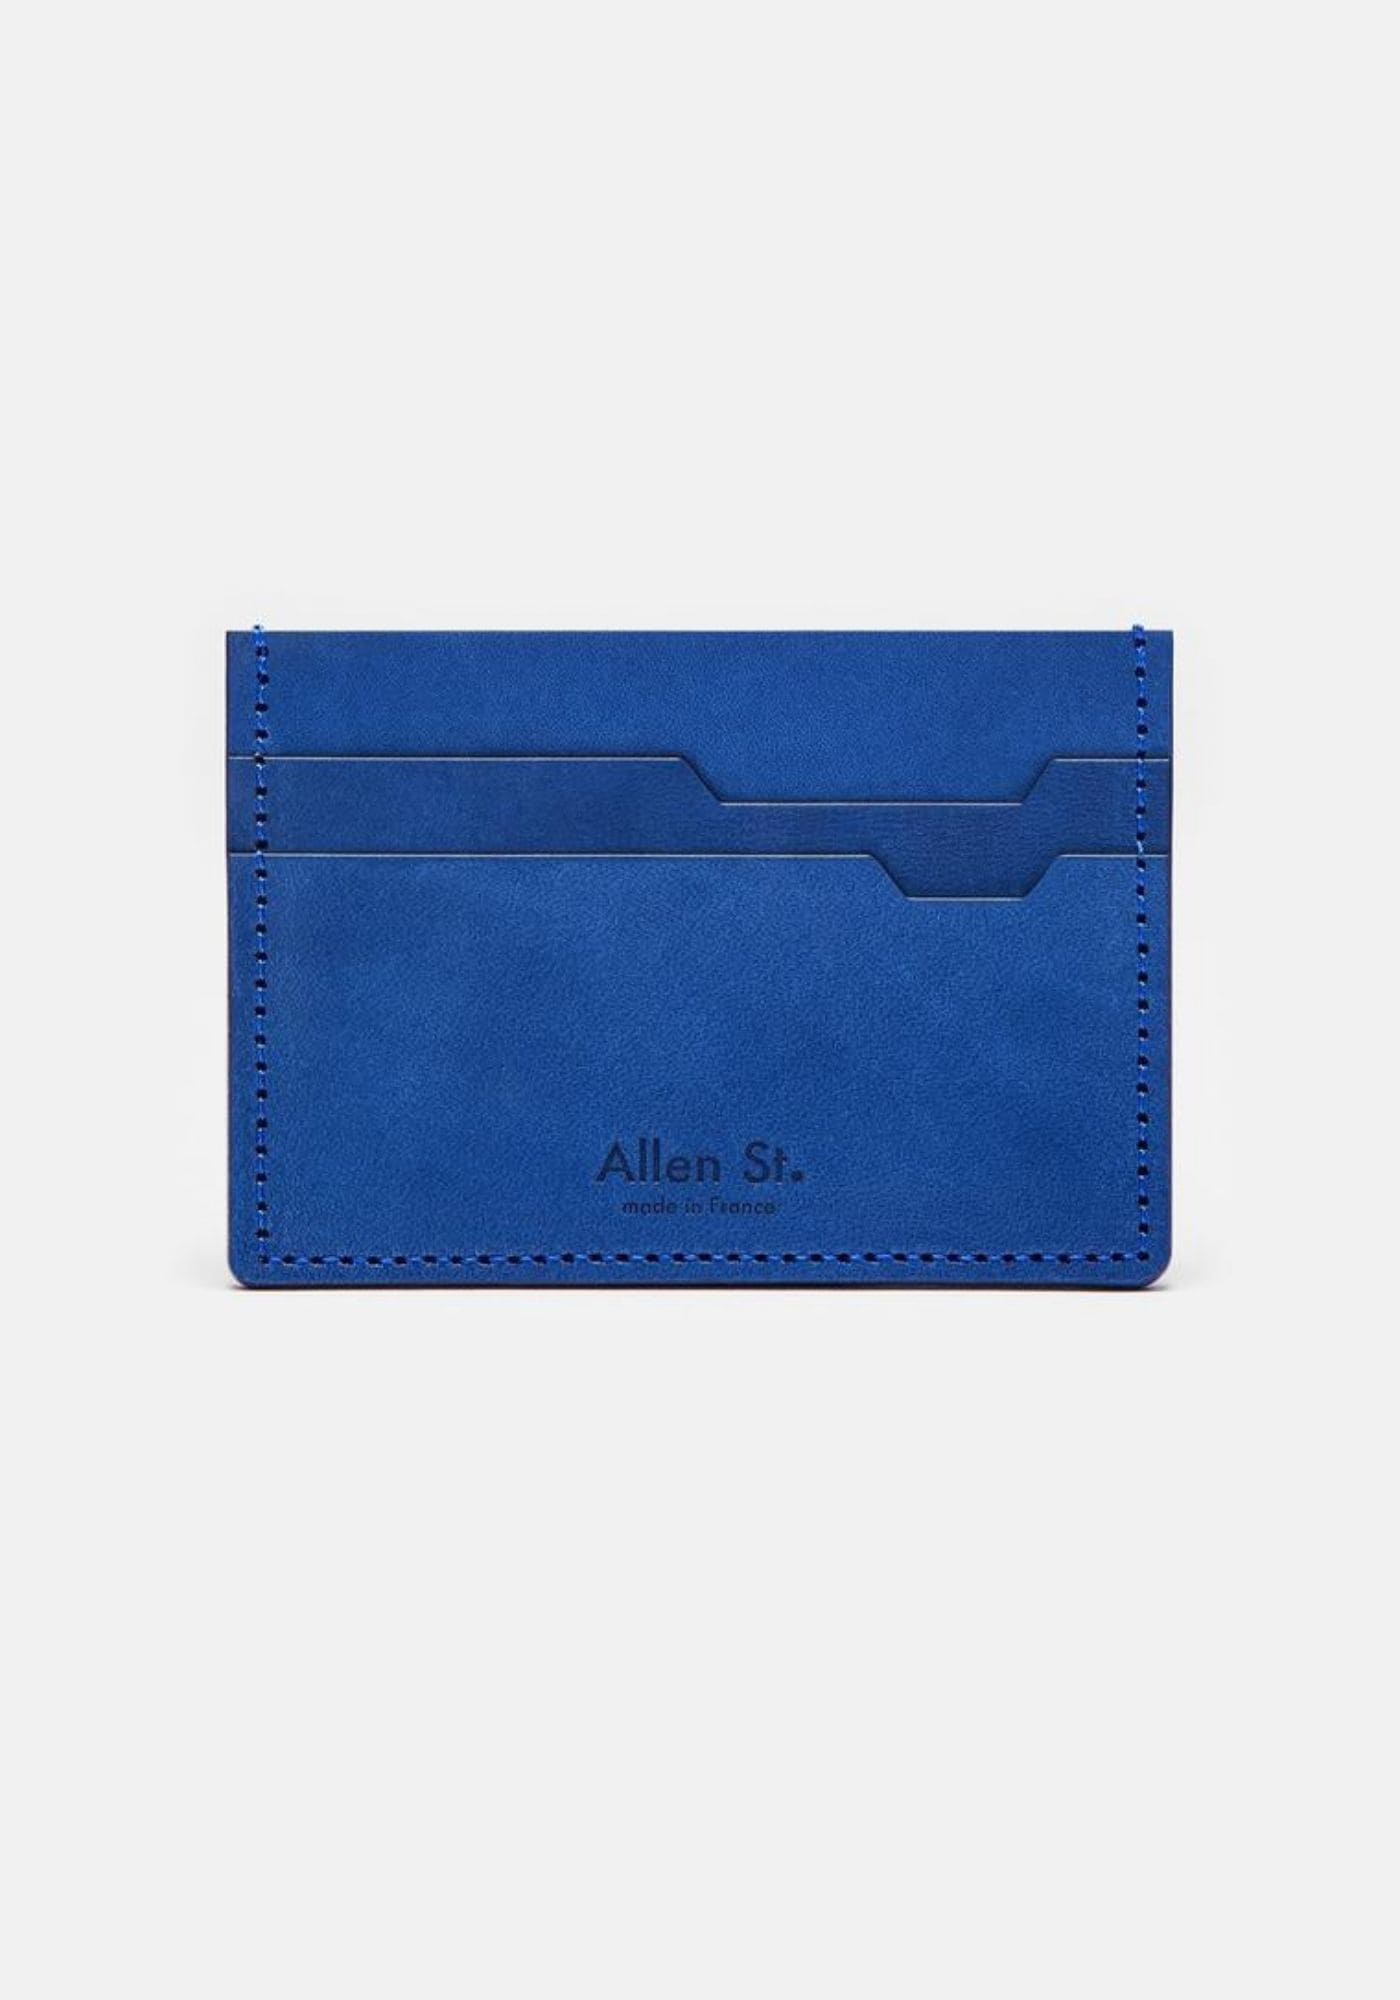 allen-st-porte-cartes-prince-4-poches-bleu-tannage-vegetal